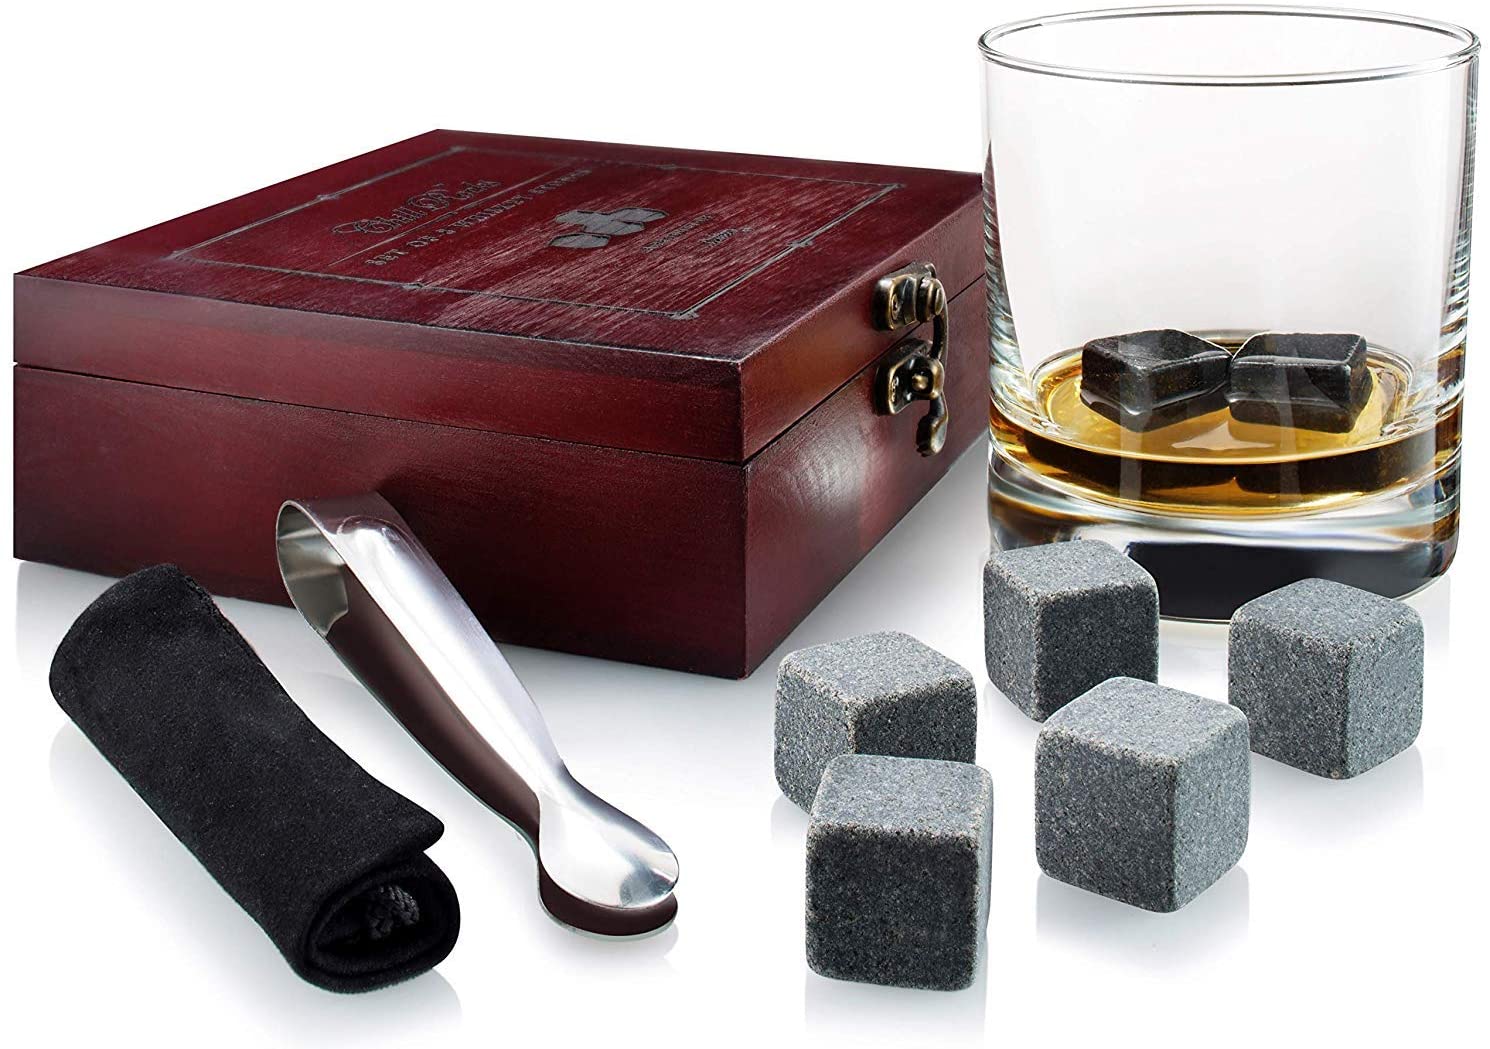 Premium Whiskey Chilling Stones Gift Set in Premium Wooden Gift Box